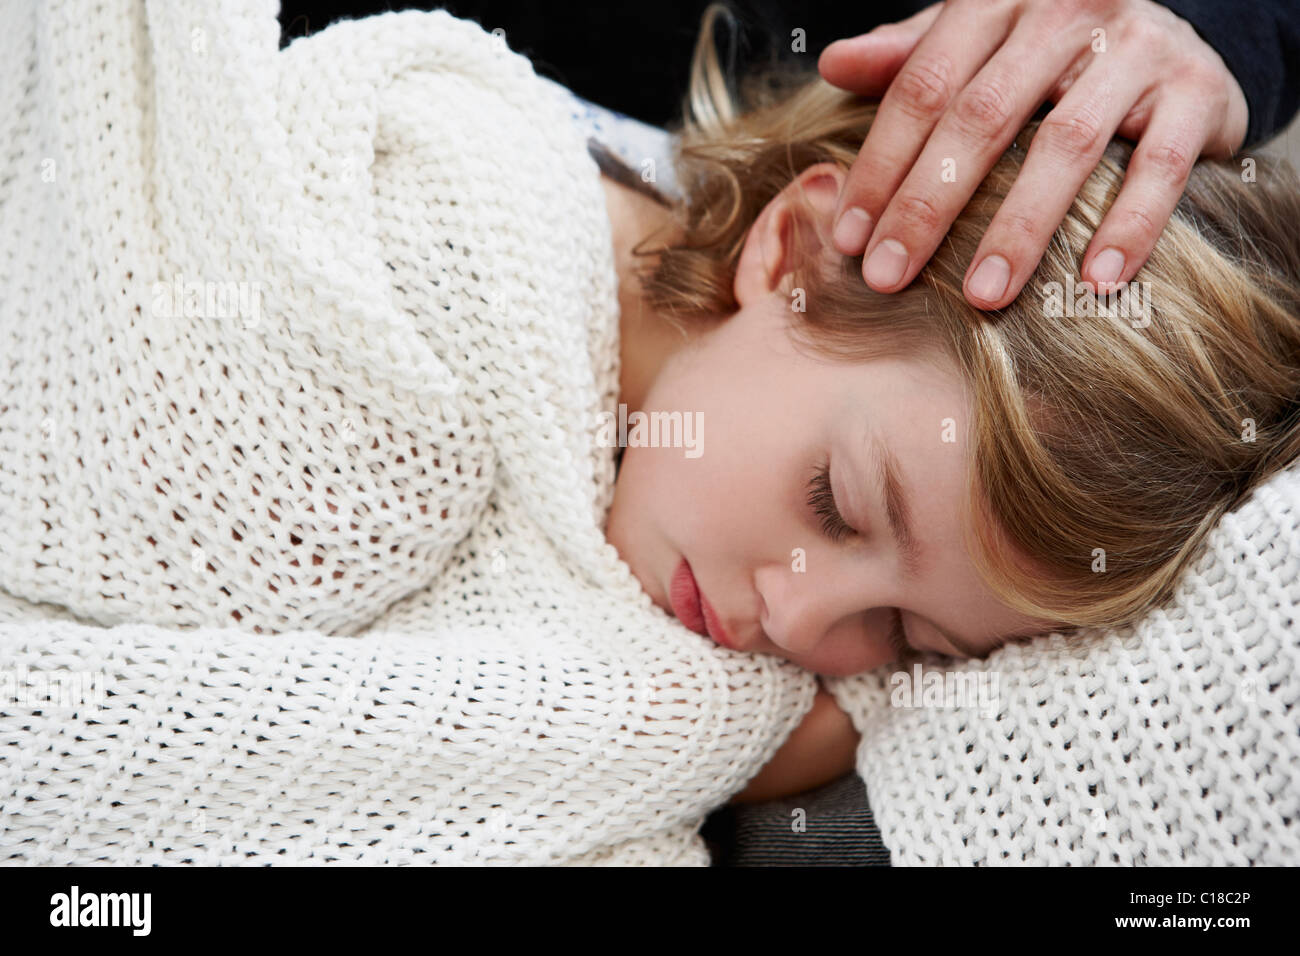 Girl sleeping under blanket Stock Photo